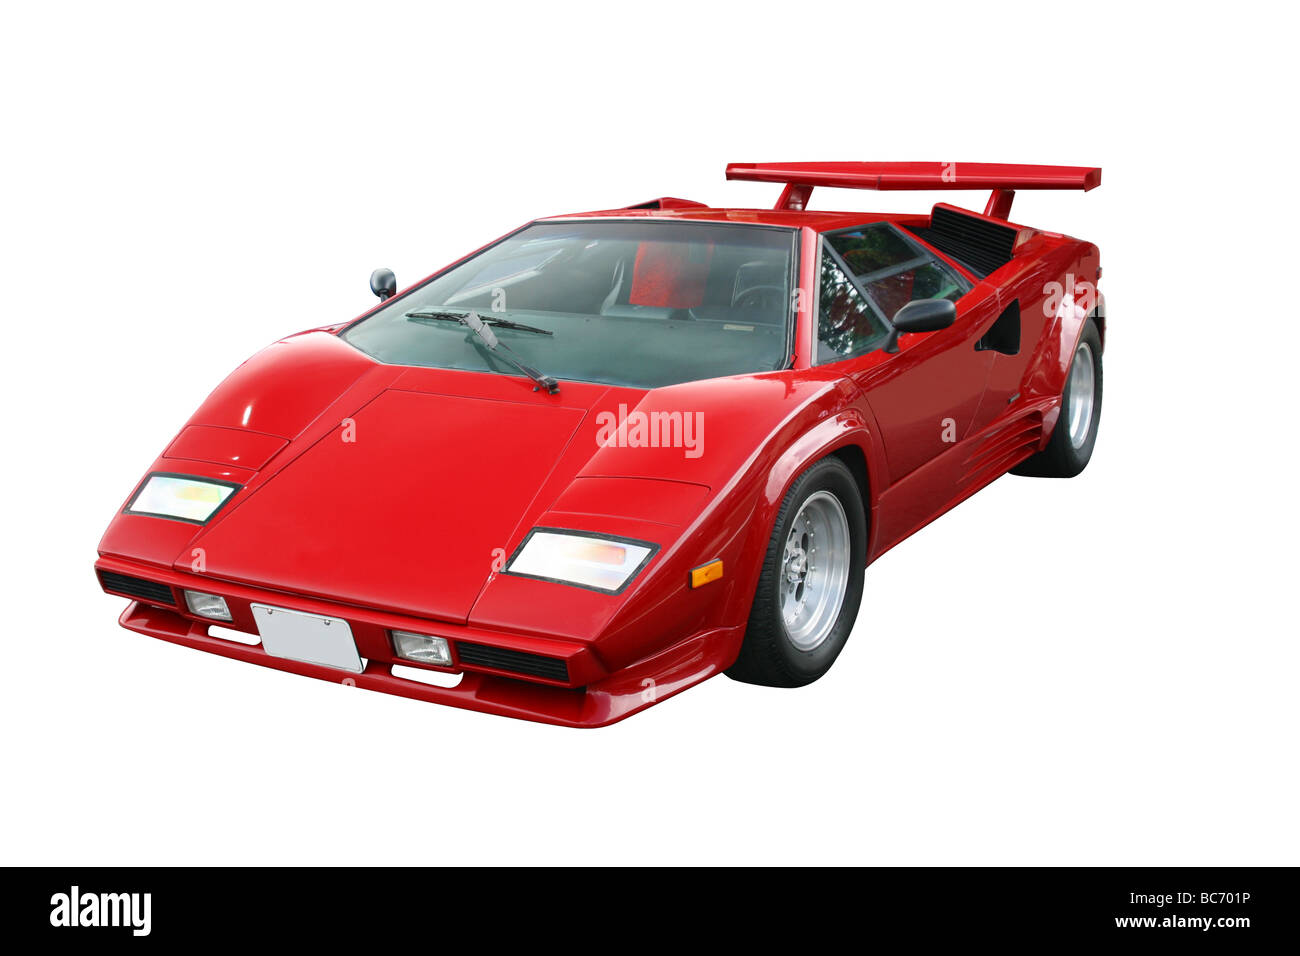 1988 Lamborghini Countach S.  Exotic sports car.  1998 kit car replica. Logos removed. Stock Photo